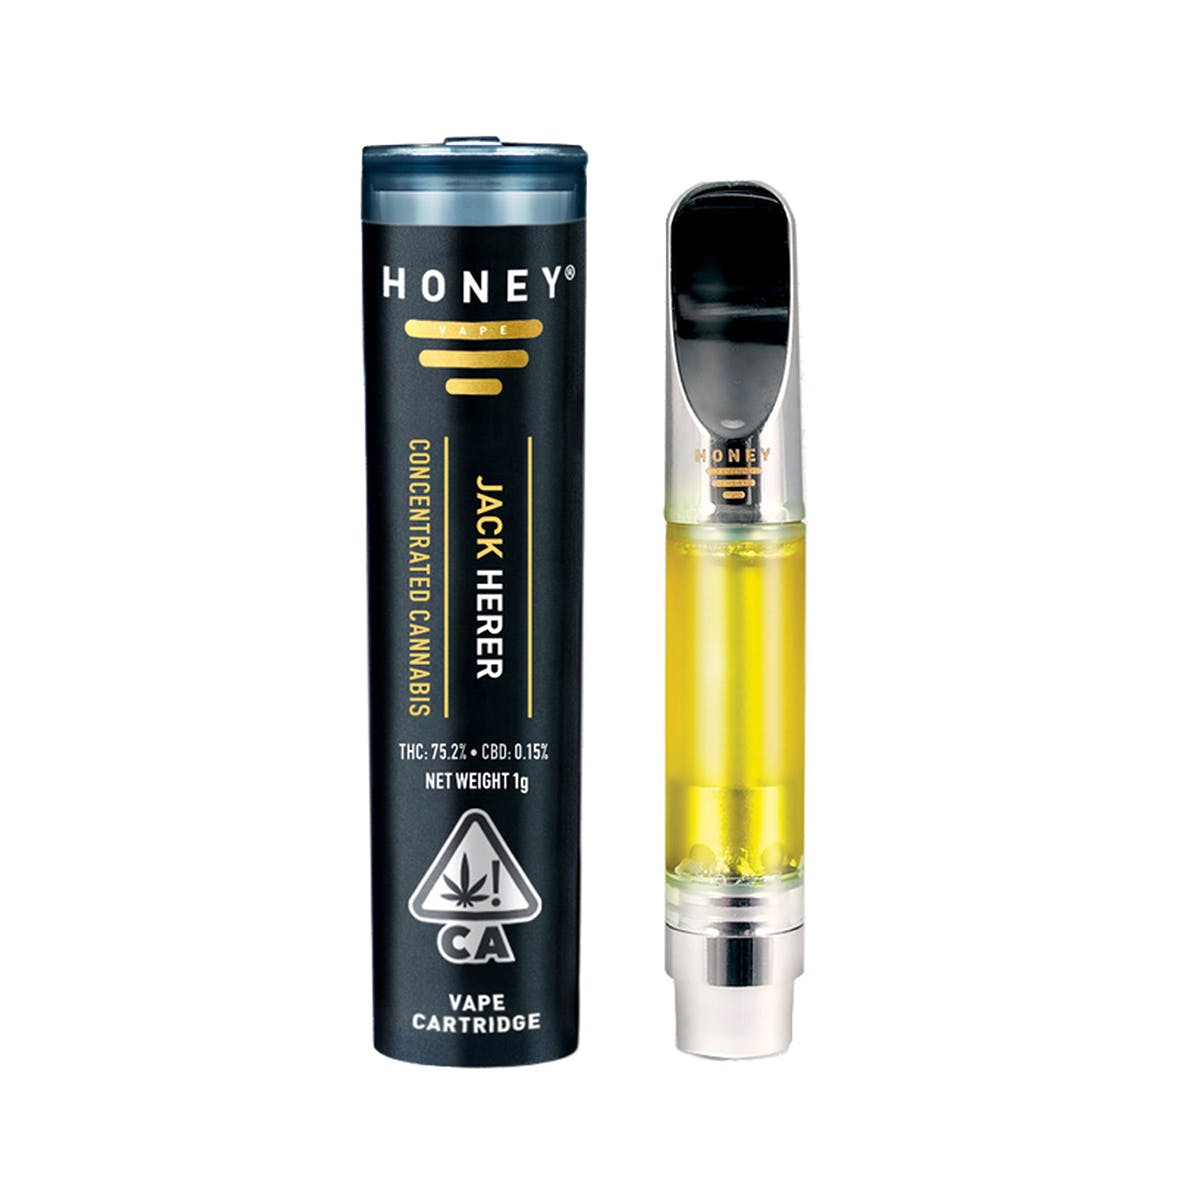 Honey® Premium Cartridge, Jack Herer